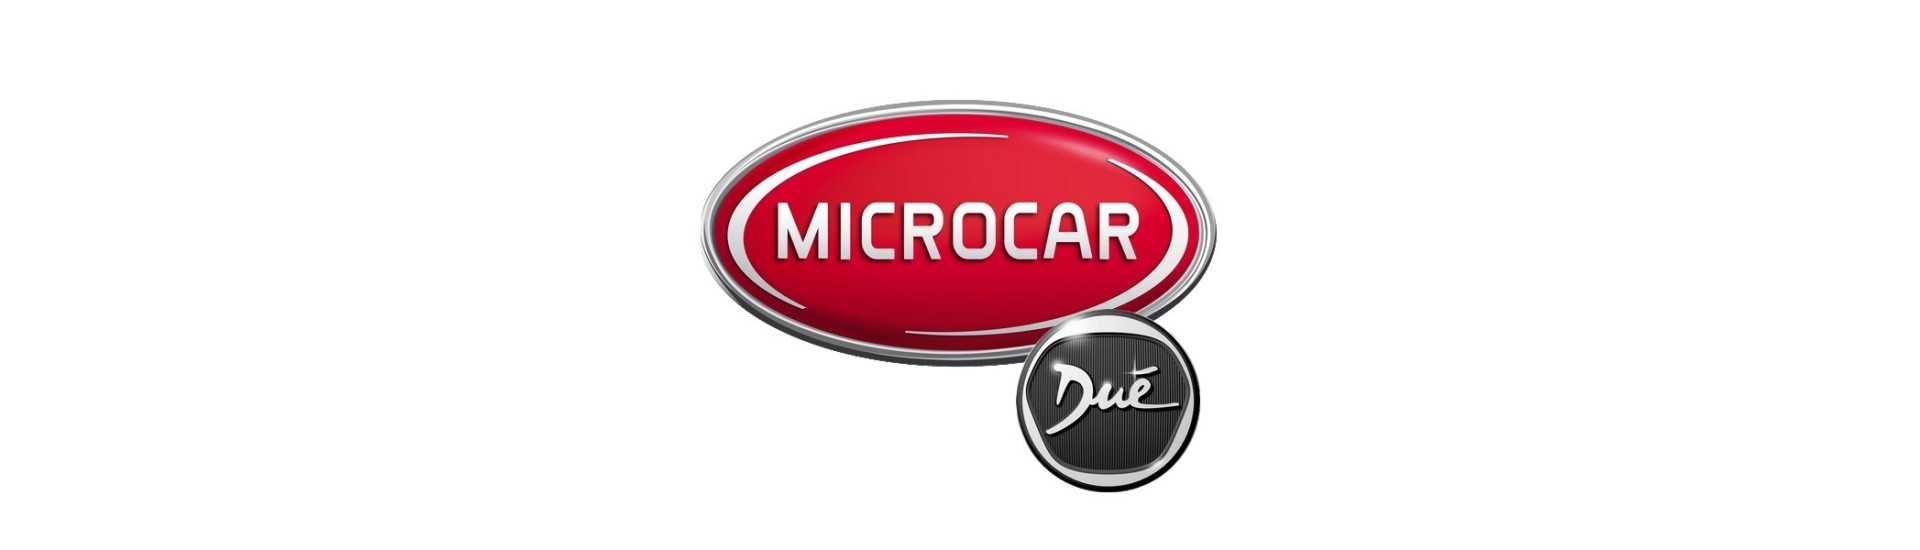 Auton paras hinta ilman lupaa Microcar Dué